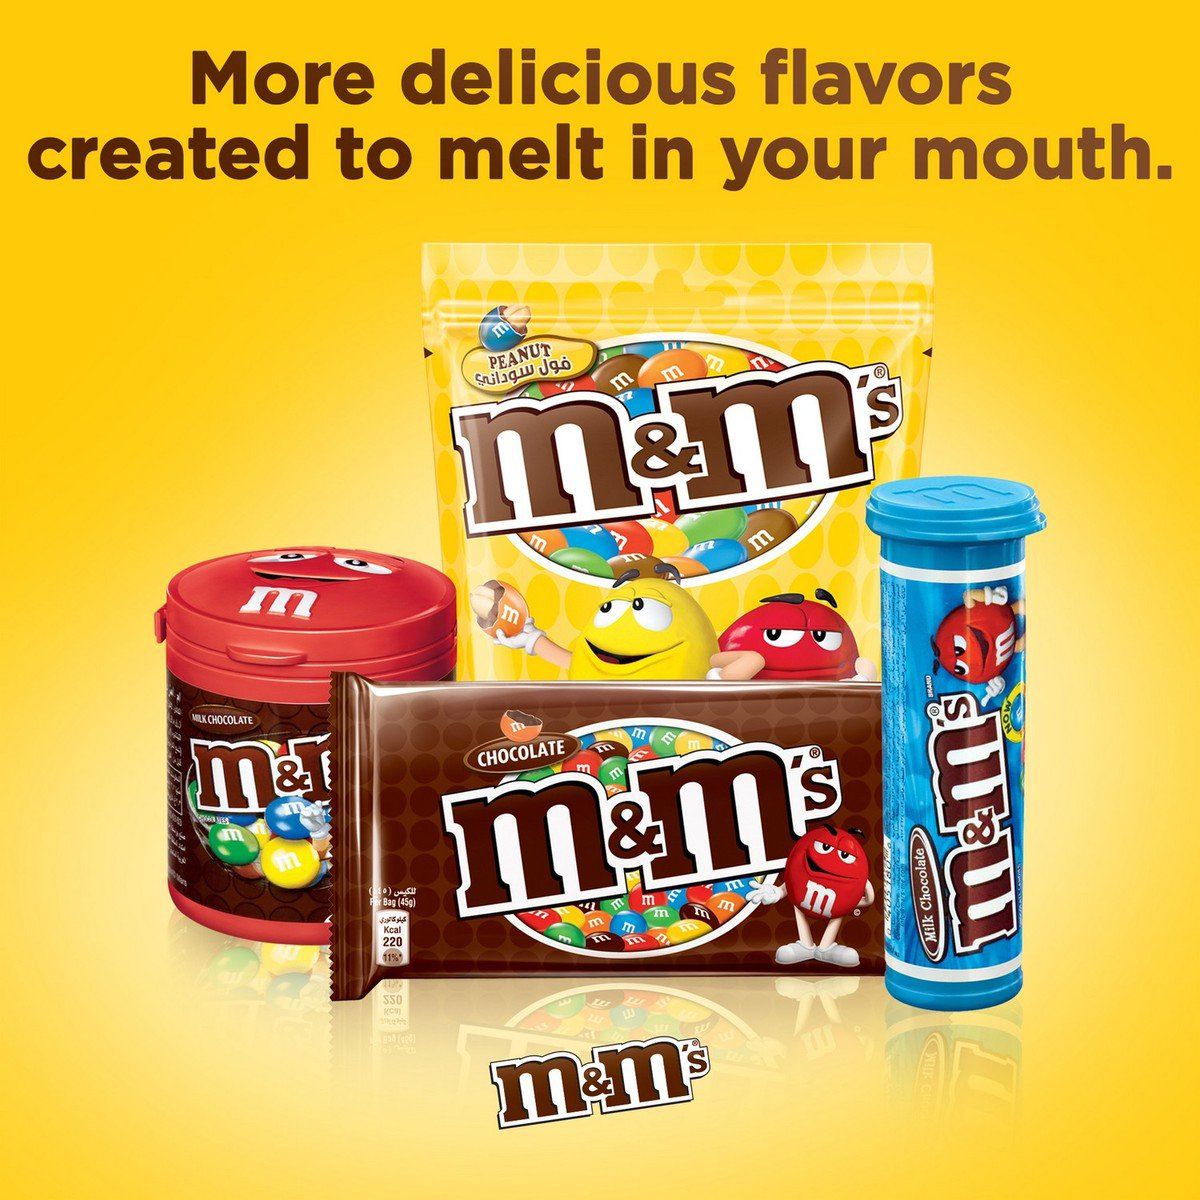 M&M's Milk Chocolate 24 x 45 g